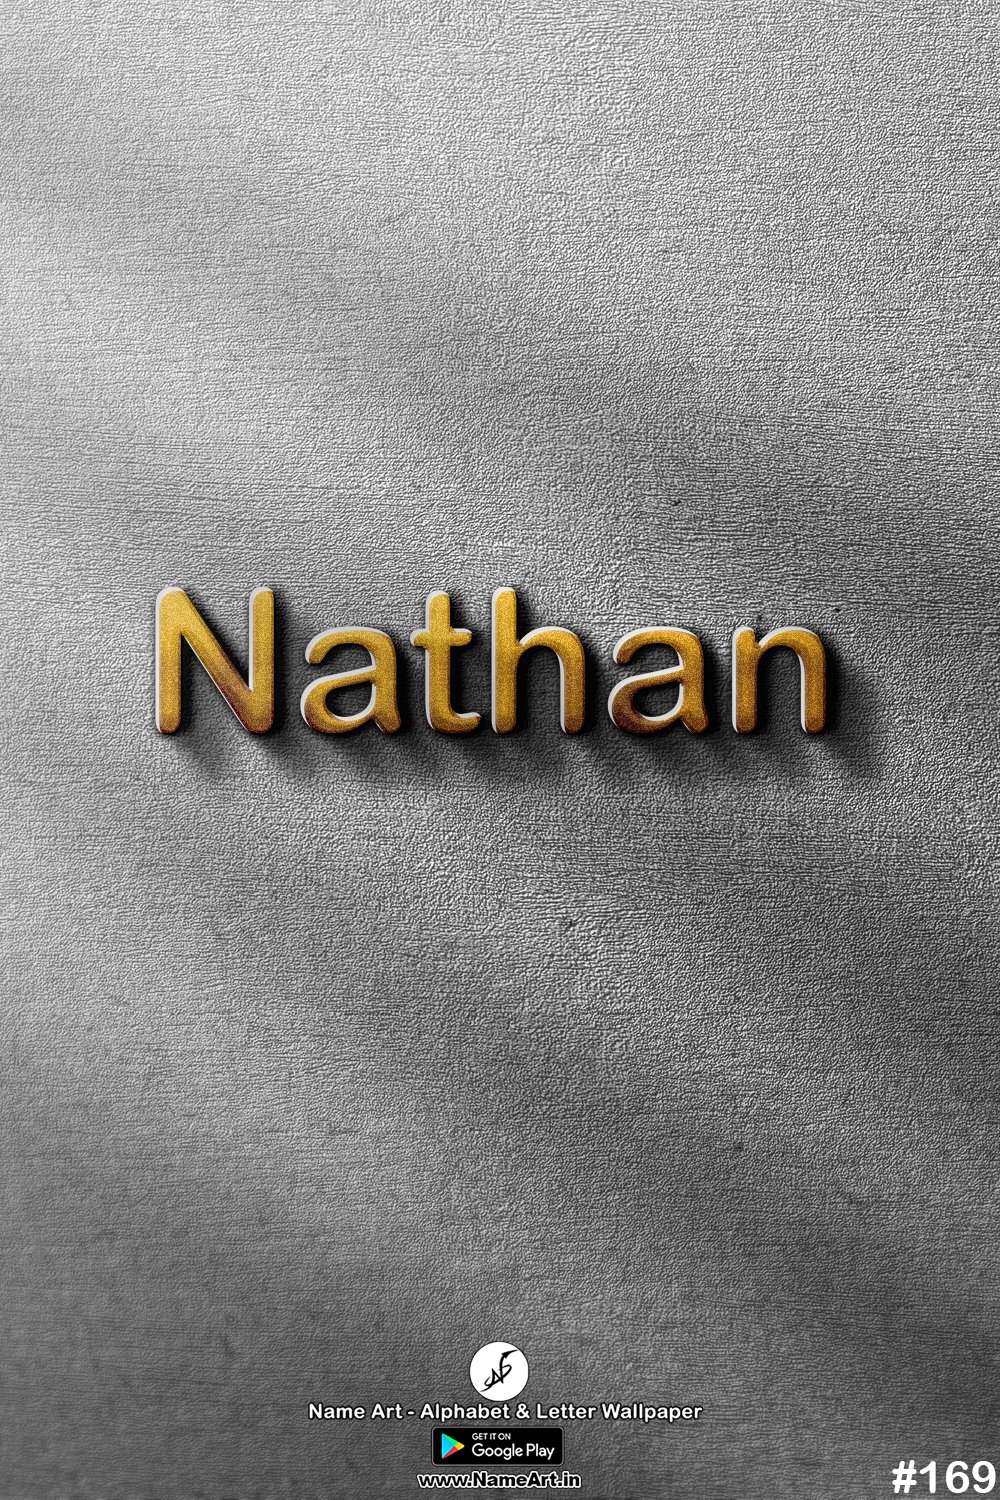 Nathan | Whatsapp Status Nathan | Happy Birthday Nathan !! | New Whatsapp Status Nathan Images |